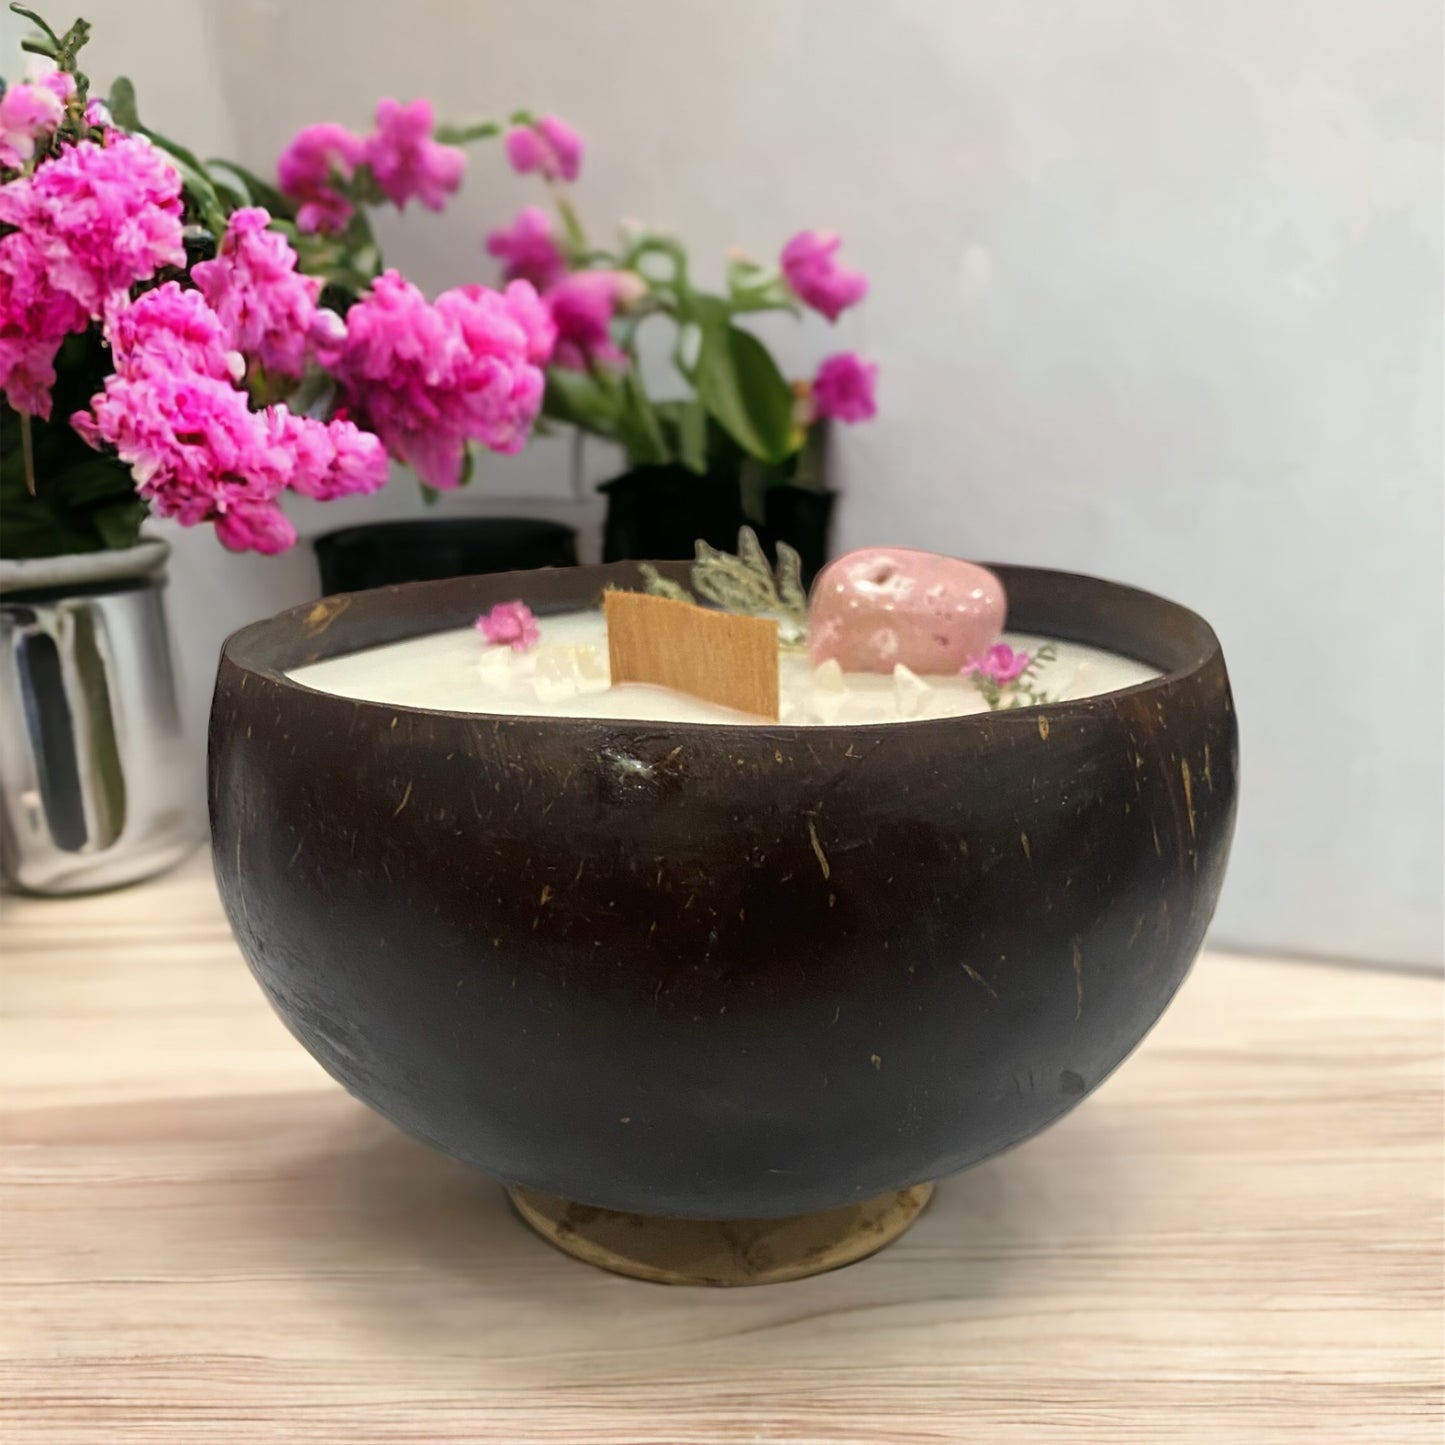 Coconut Bowl Candles Medium | Kyoto Blossom